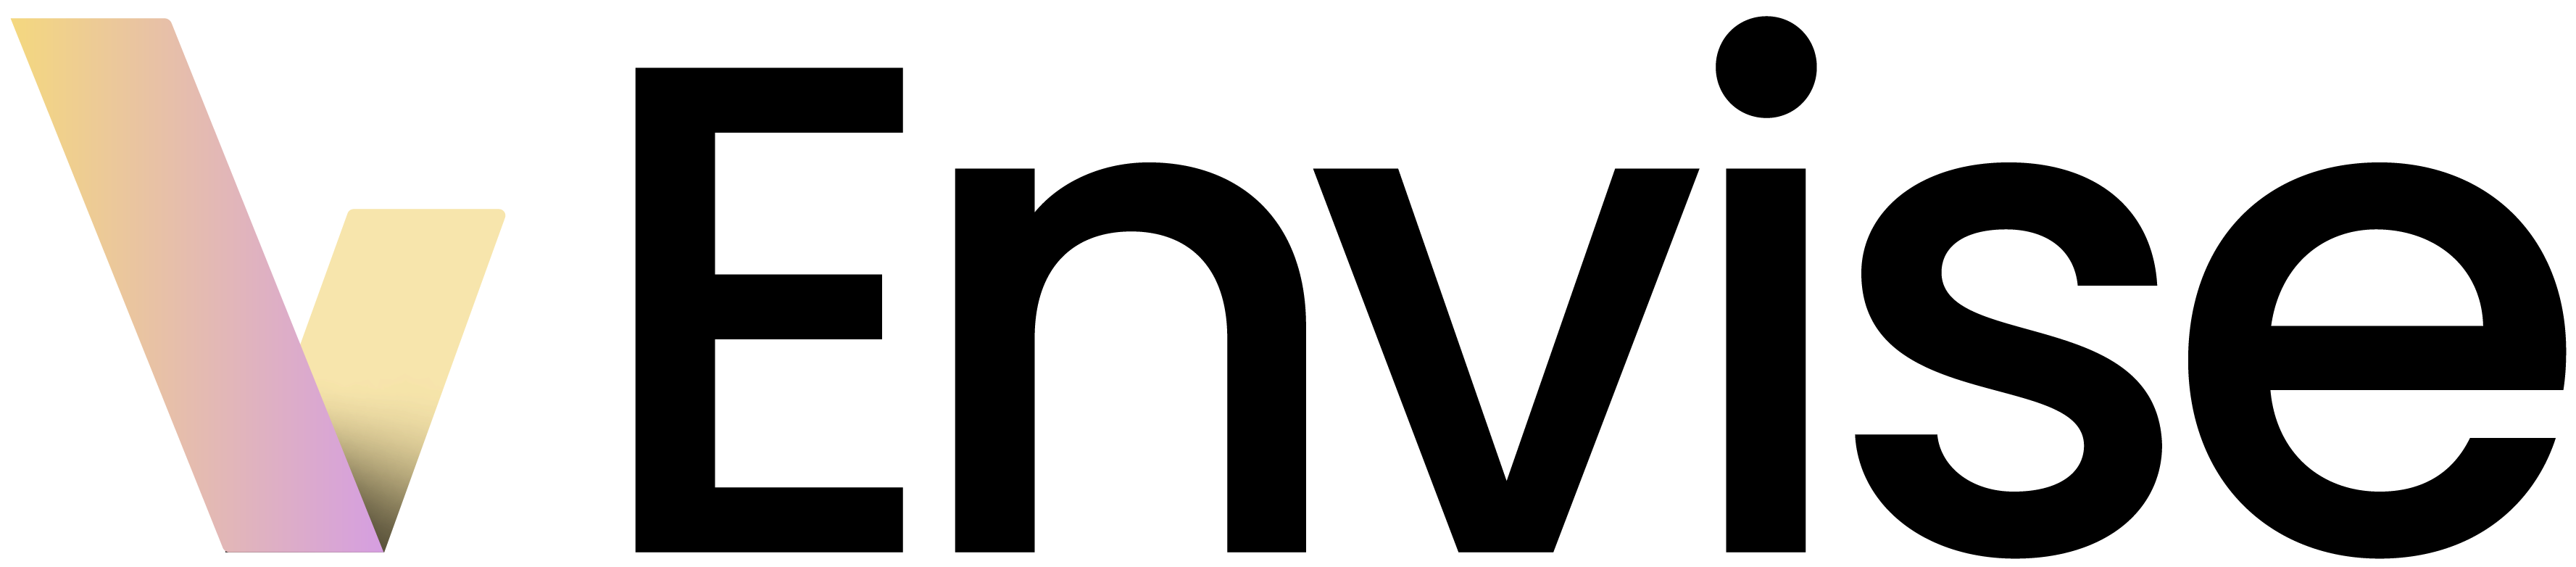 envise logo